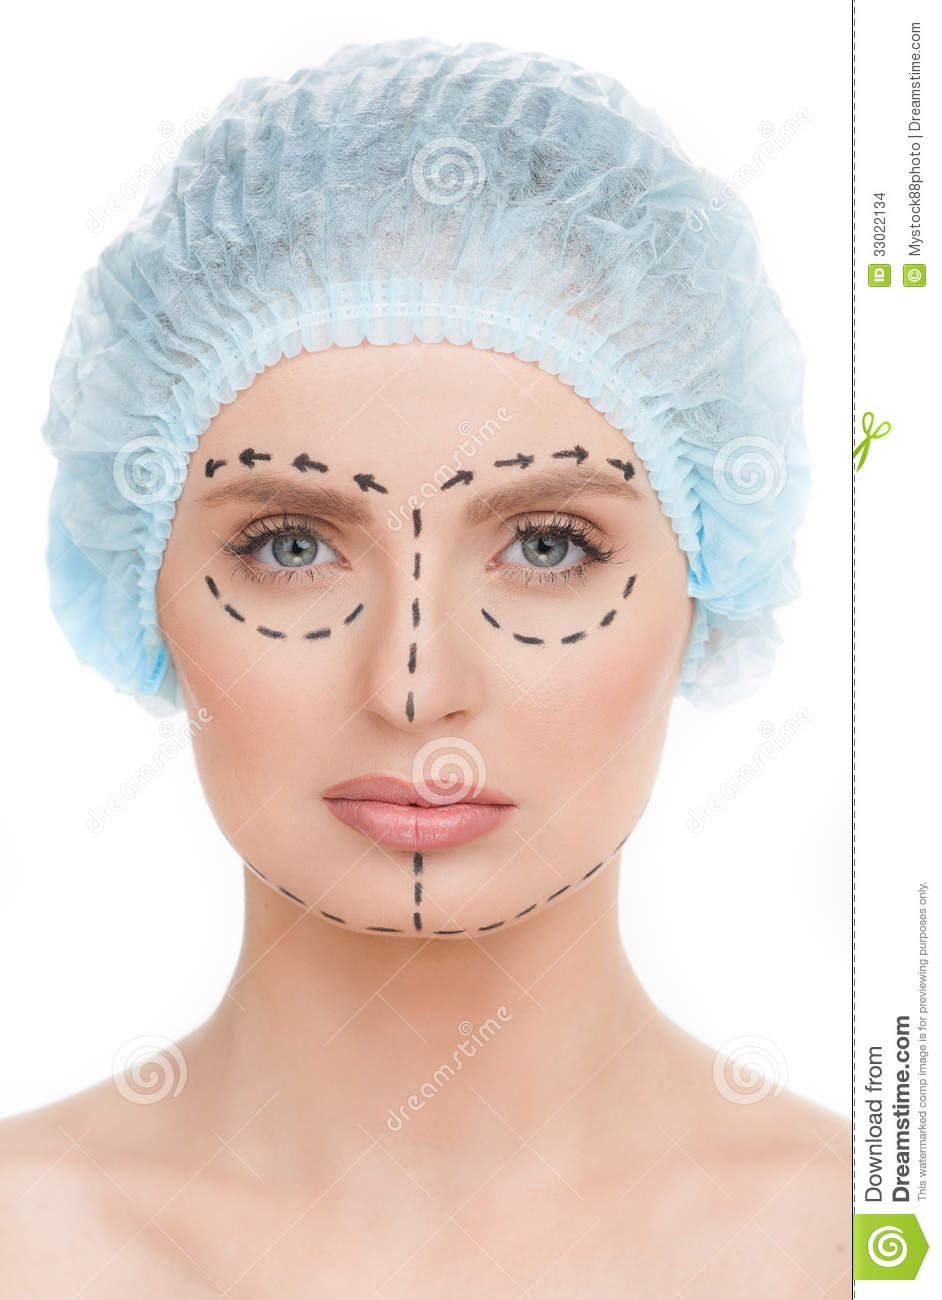 Plastic surgery facial woman